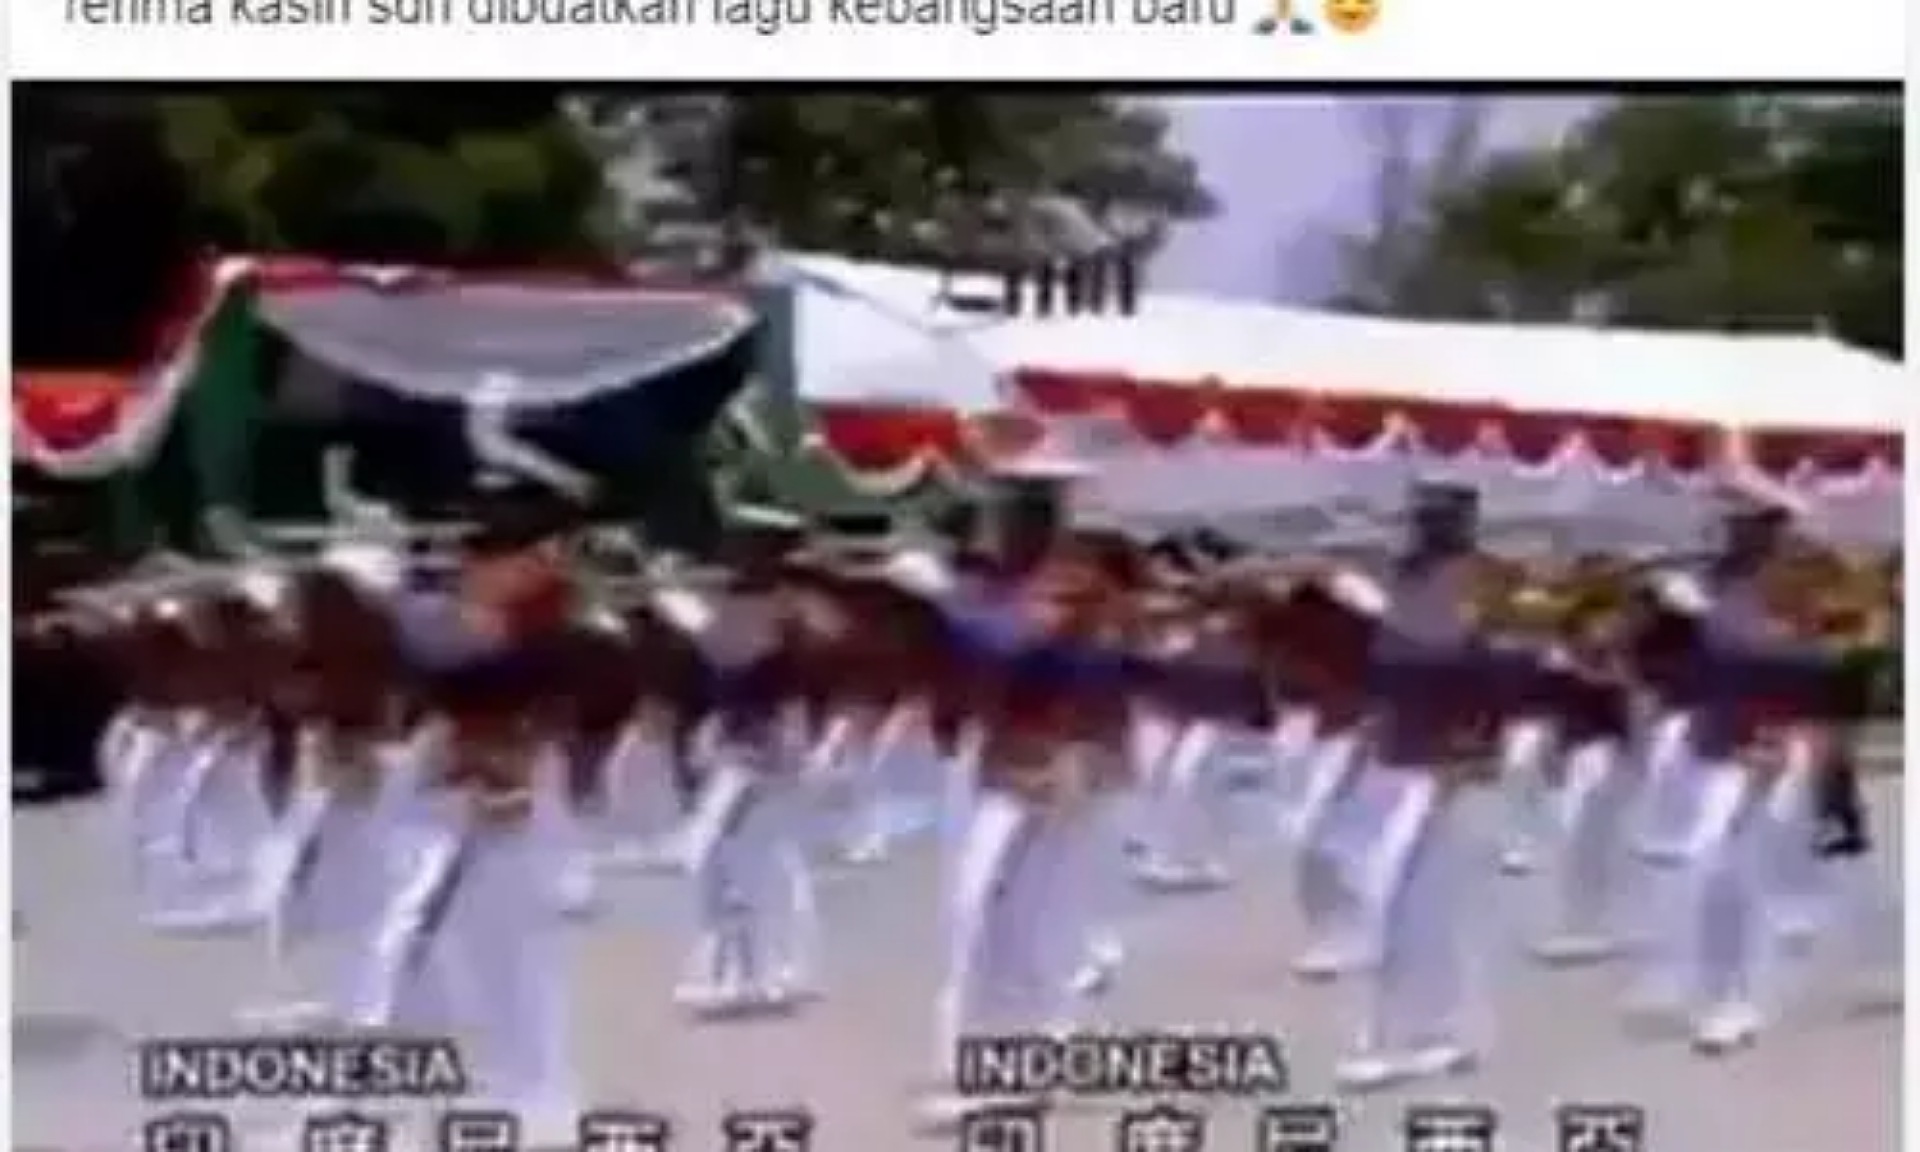 Viral Lagu Kebangsaan Baru Indonesia Berbahasa Mandarin, Berikut Faktanya